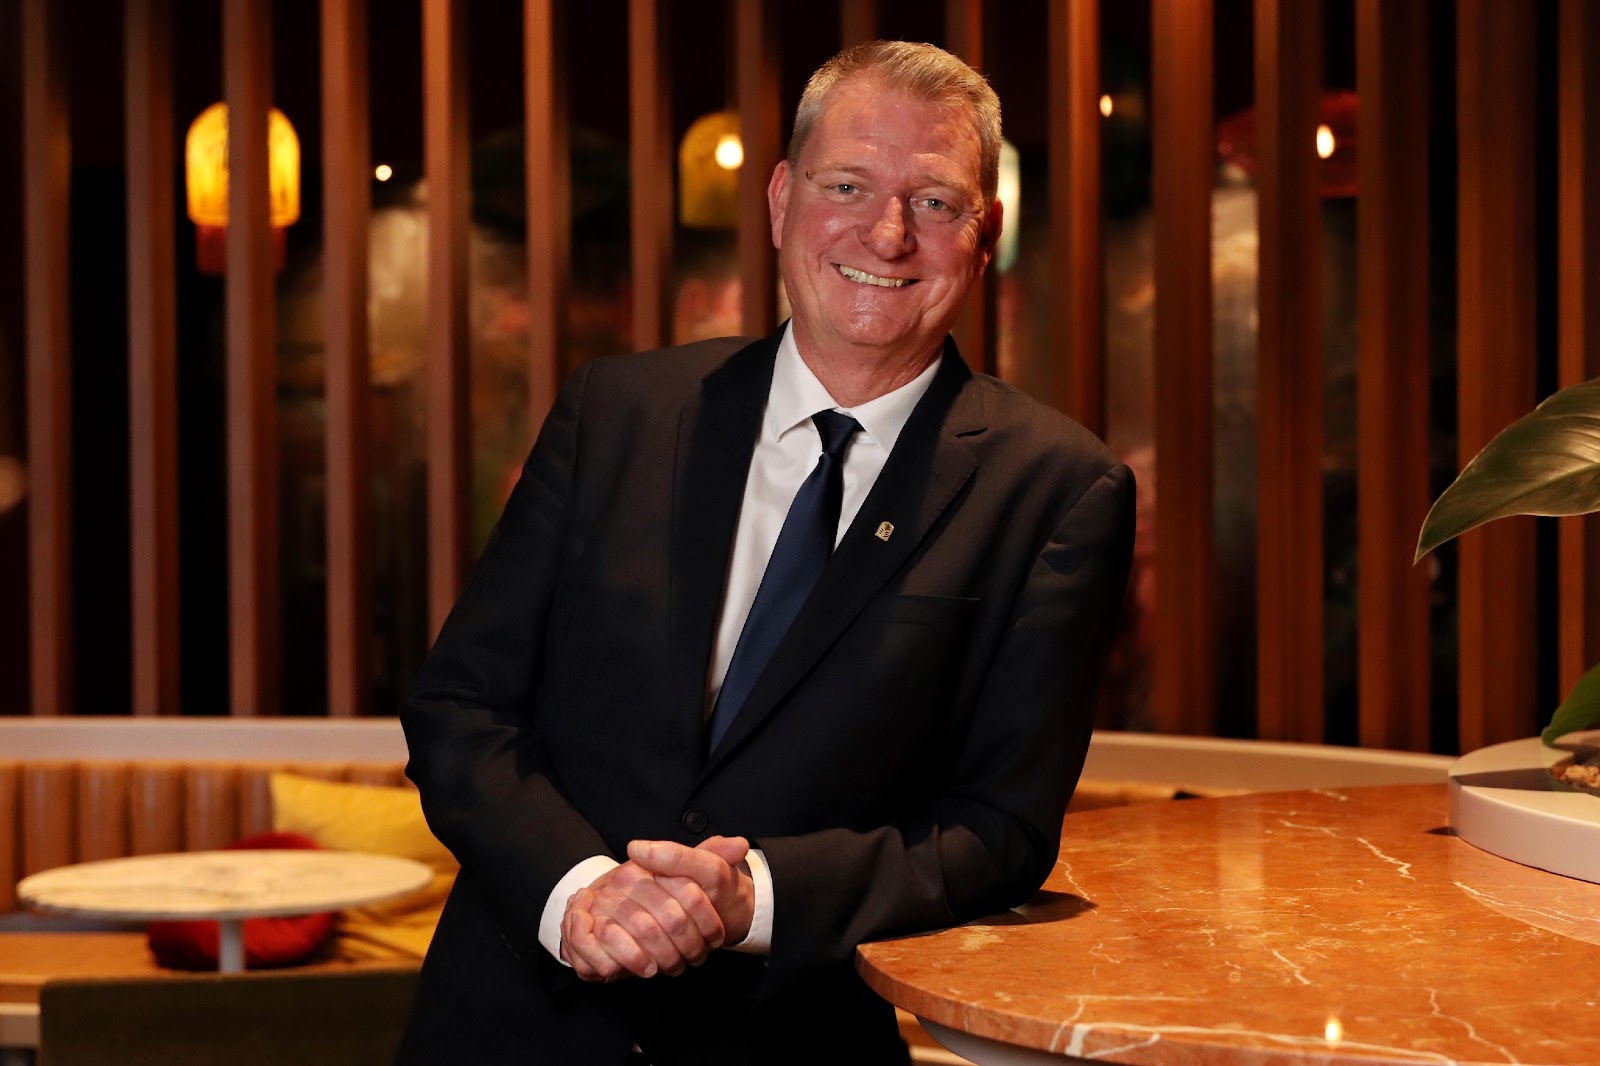 Paul Flett, General Manager, Pan Pacific Perth Hotel